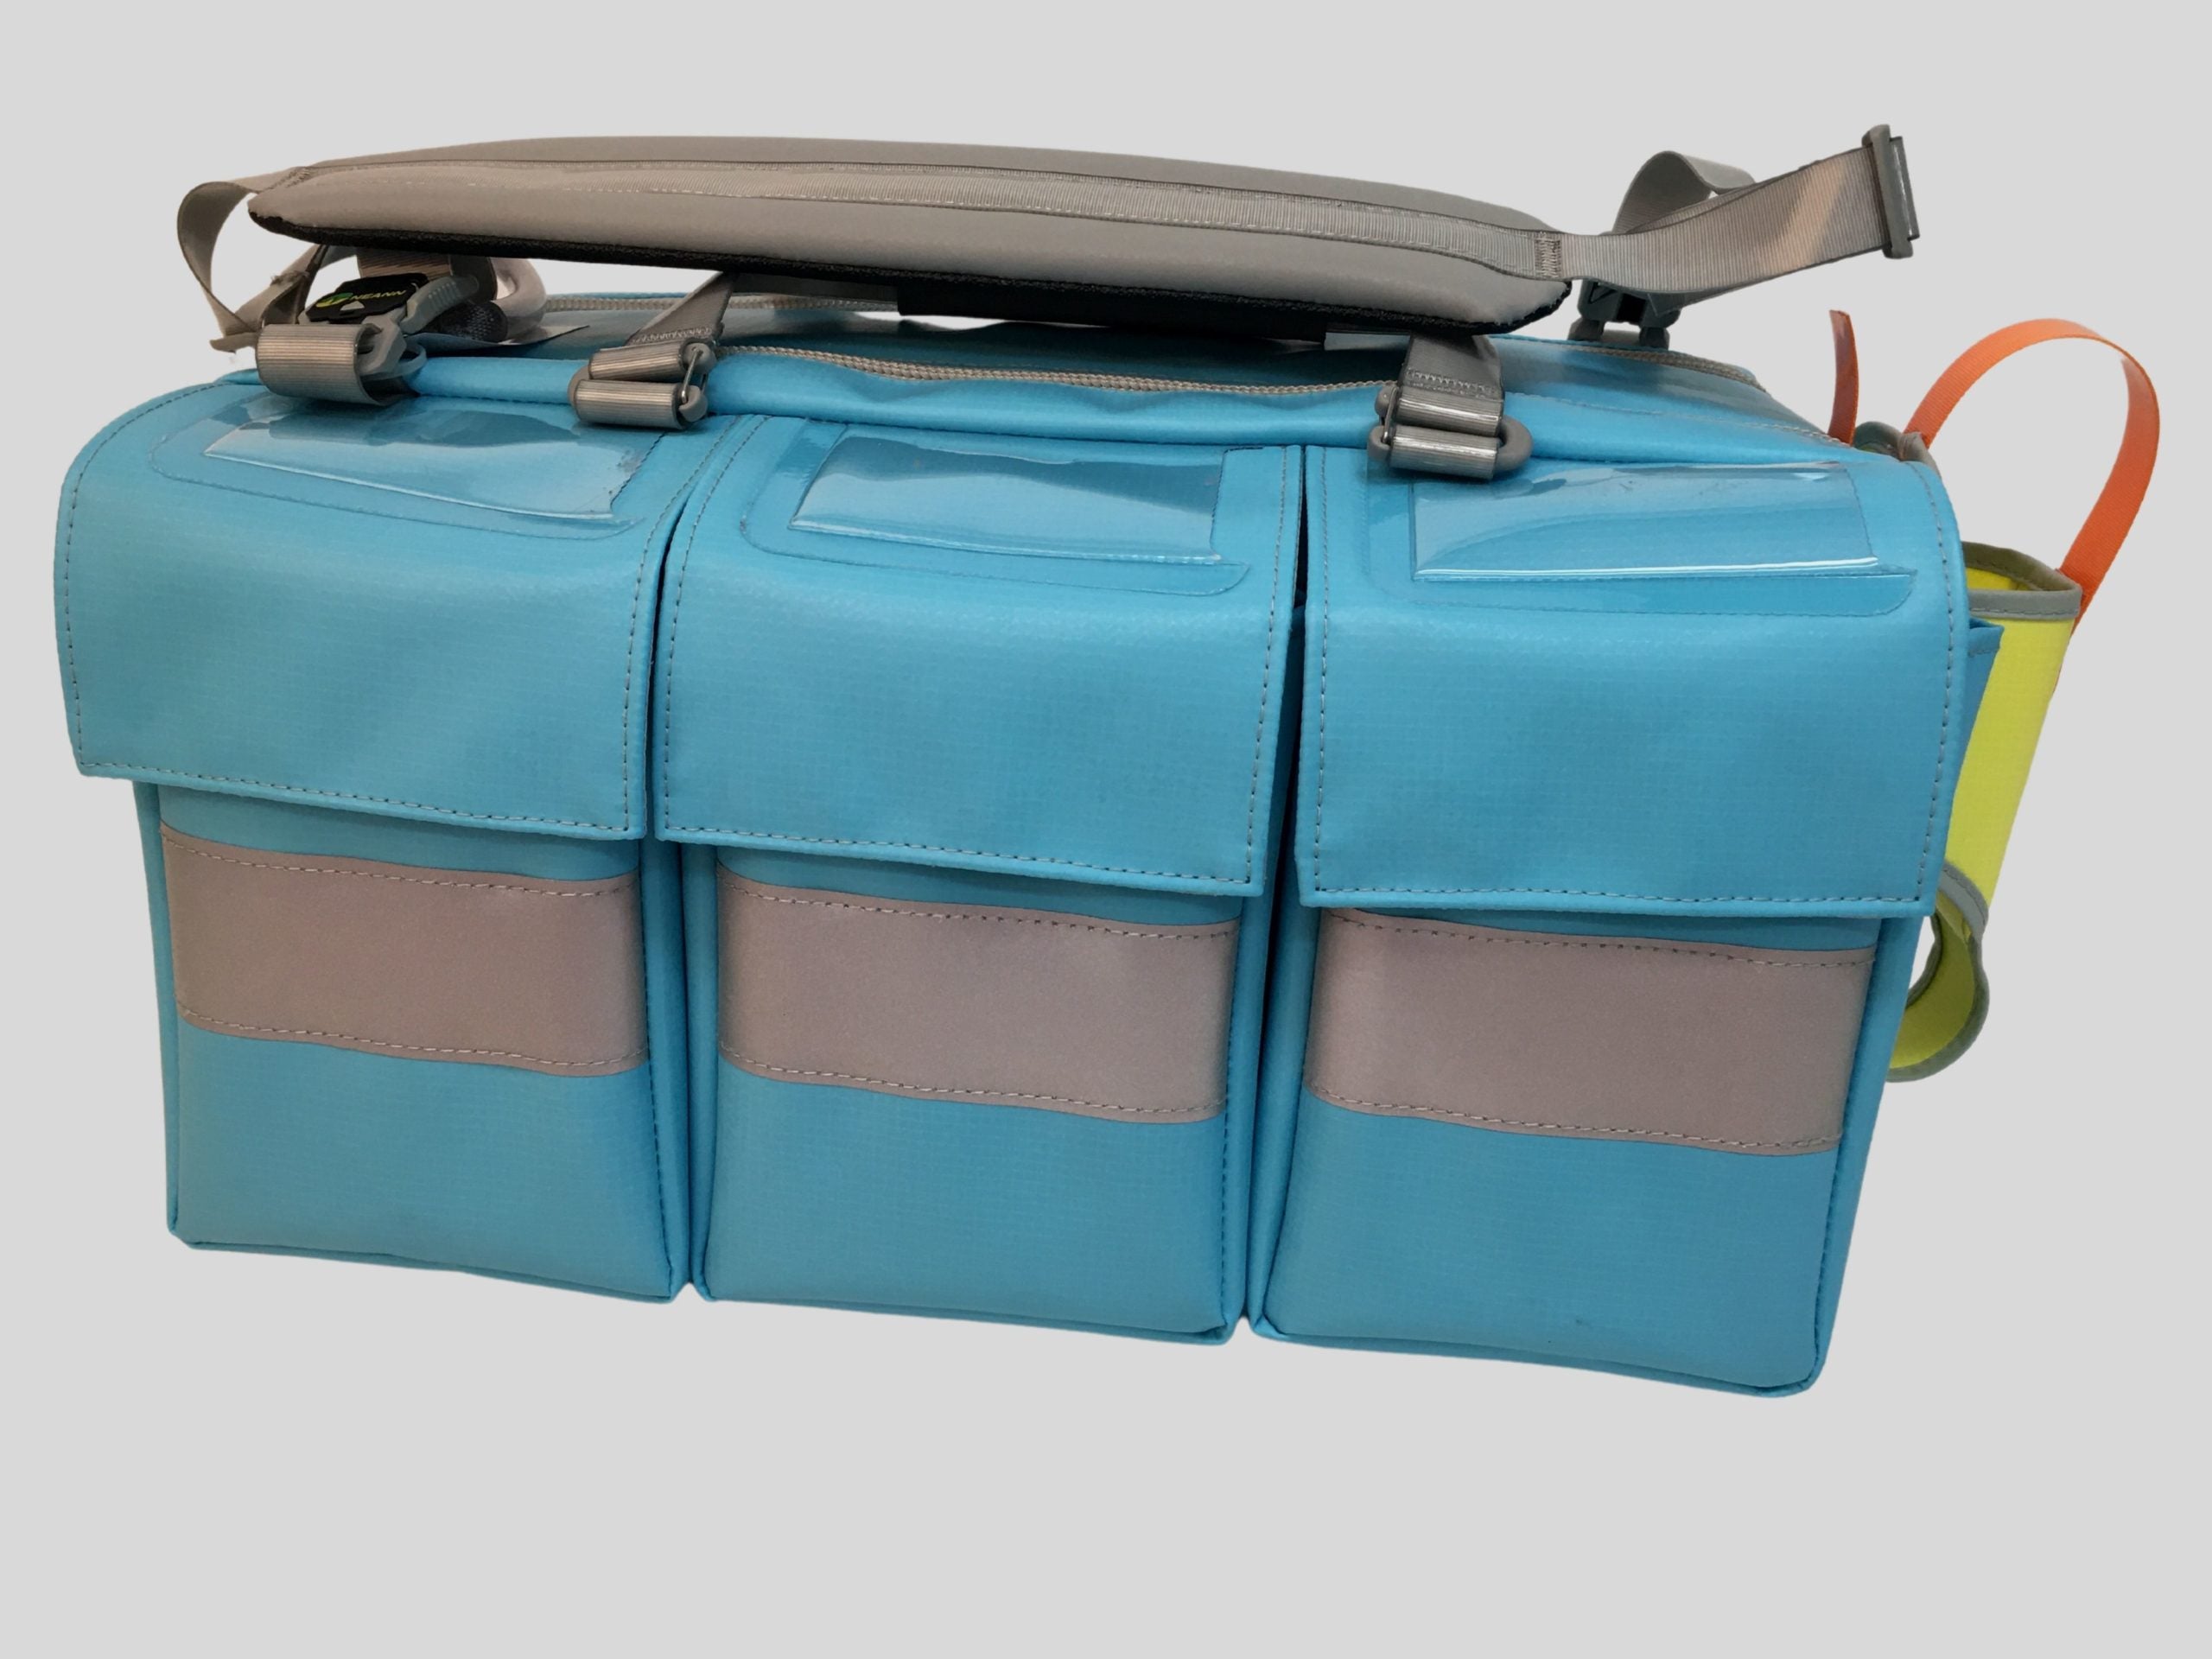 Neann Patient Transport Kit Bag Only - Blue